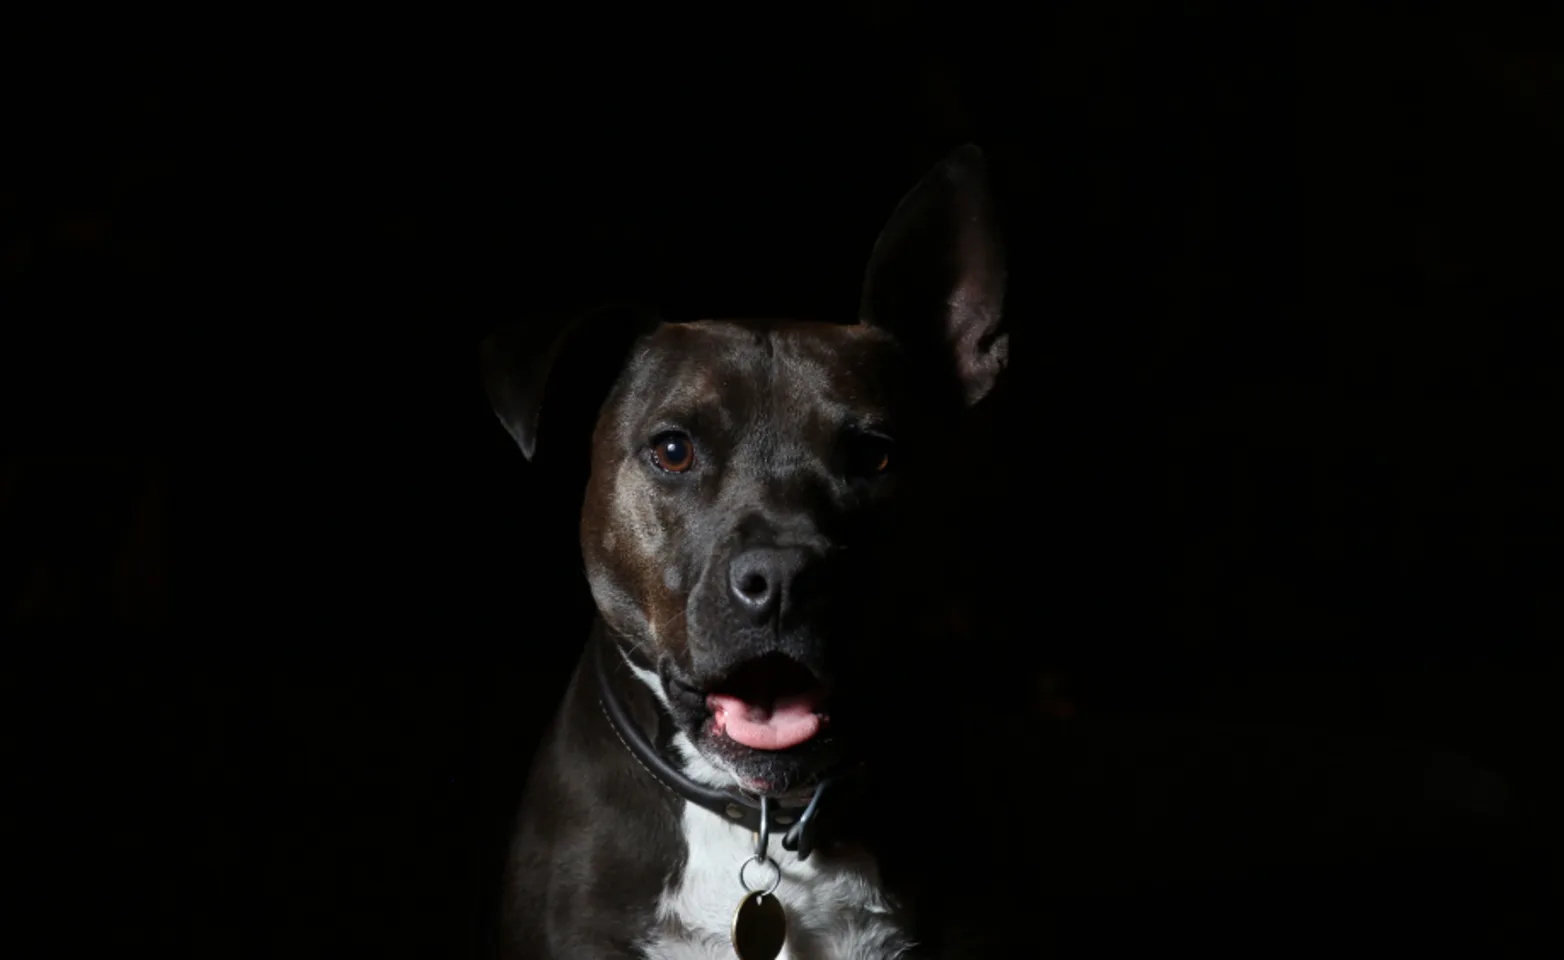 A studio photo of a dog on a black background